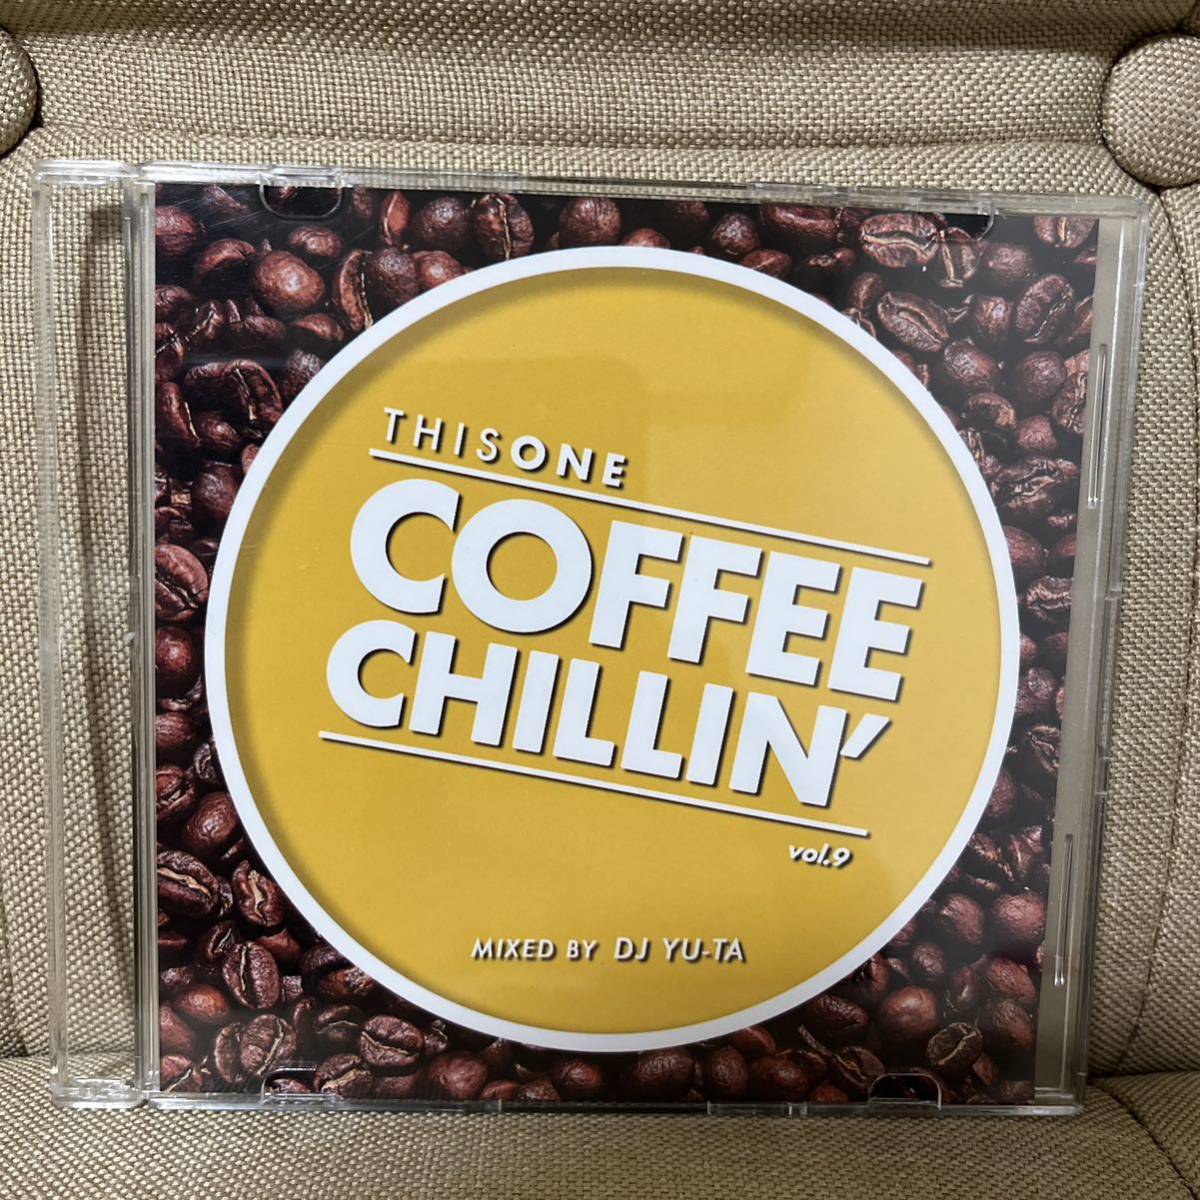 【DJ YU-TA】 COFFEE CHILLIN' -vol.9-【MIX CD】【R&B】【THIS ONE】【廃盤】【送料無料】_画像1